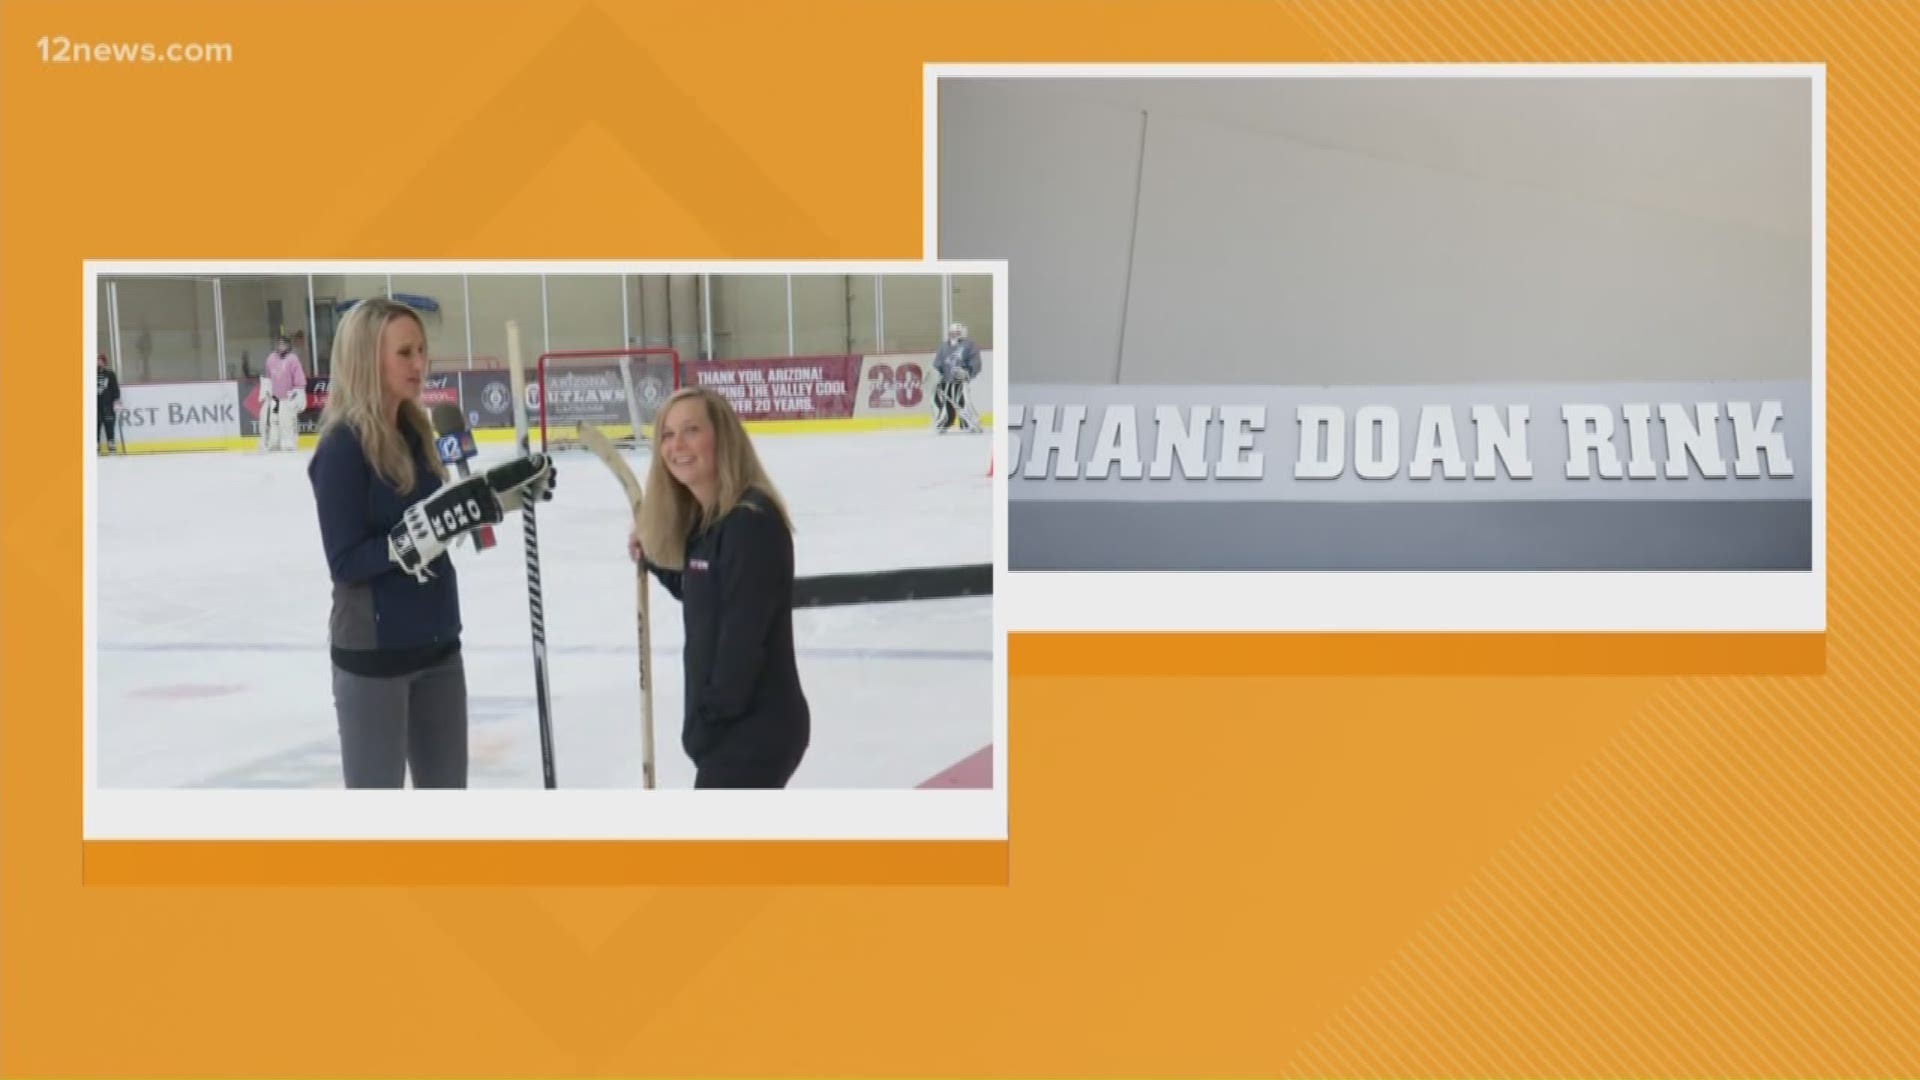 Sunday there was a dedication ceremony to the ambassador of ice hockey in Arizona, Shane Doan.